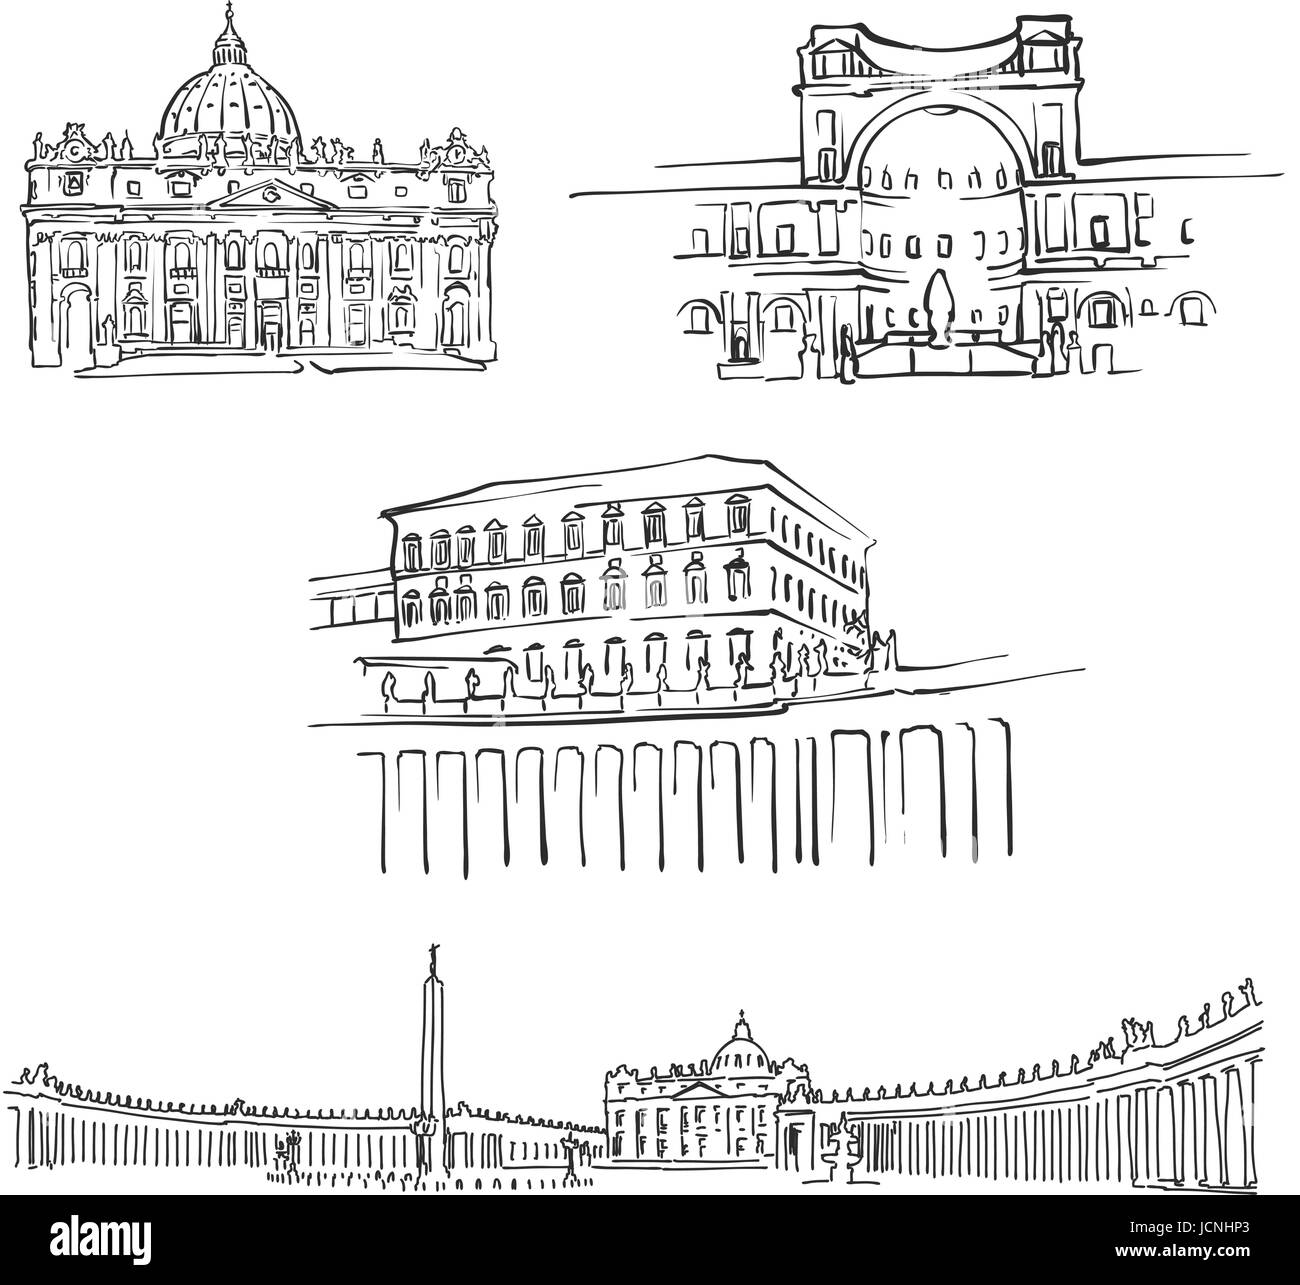 Vatikan berühmte Bauwerke, Monochrom beschriebenen Reisen Sehenswürdigkeiten, skalierbare Vektor-Illustration Stock Vektor